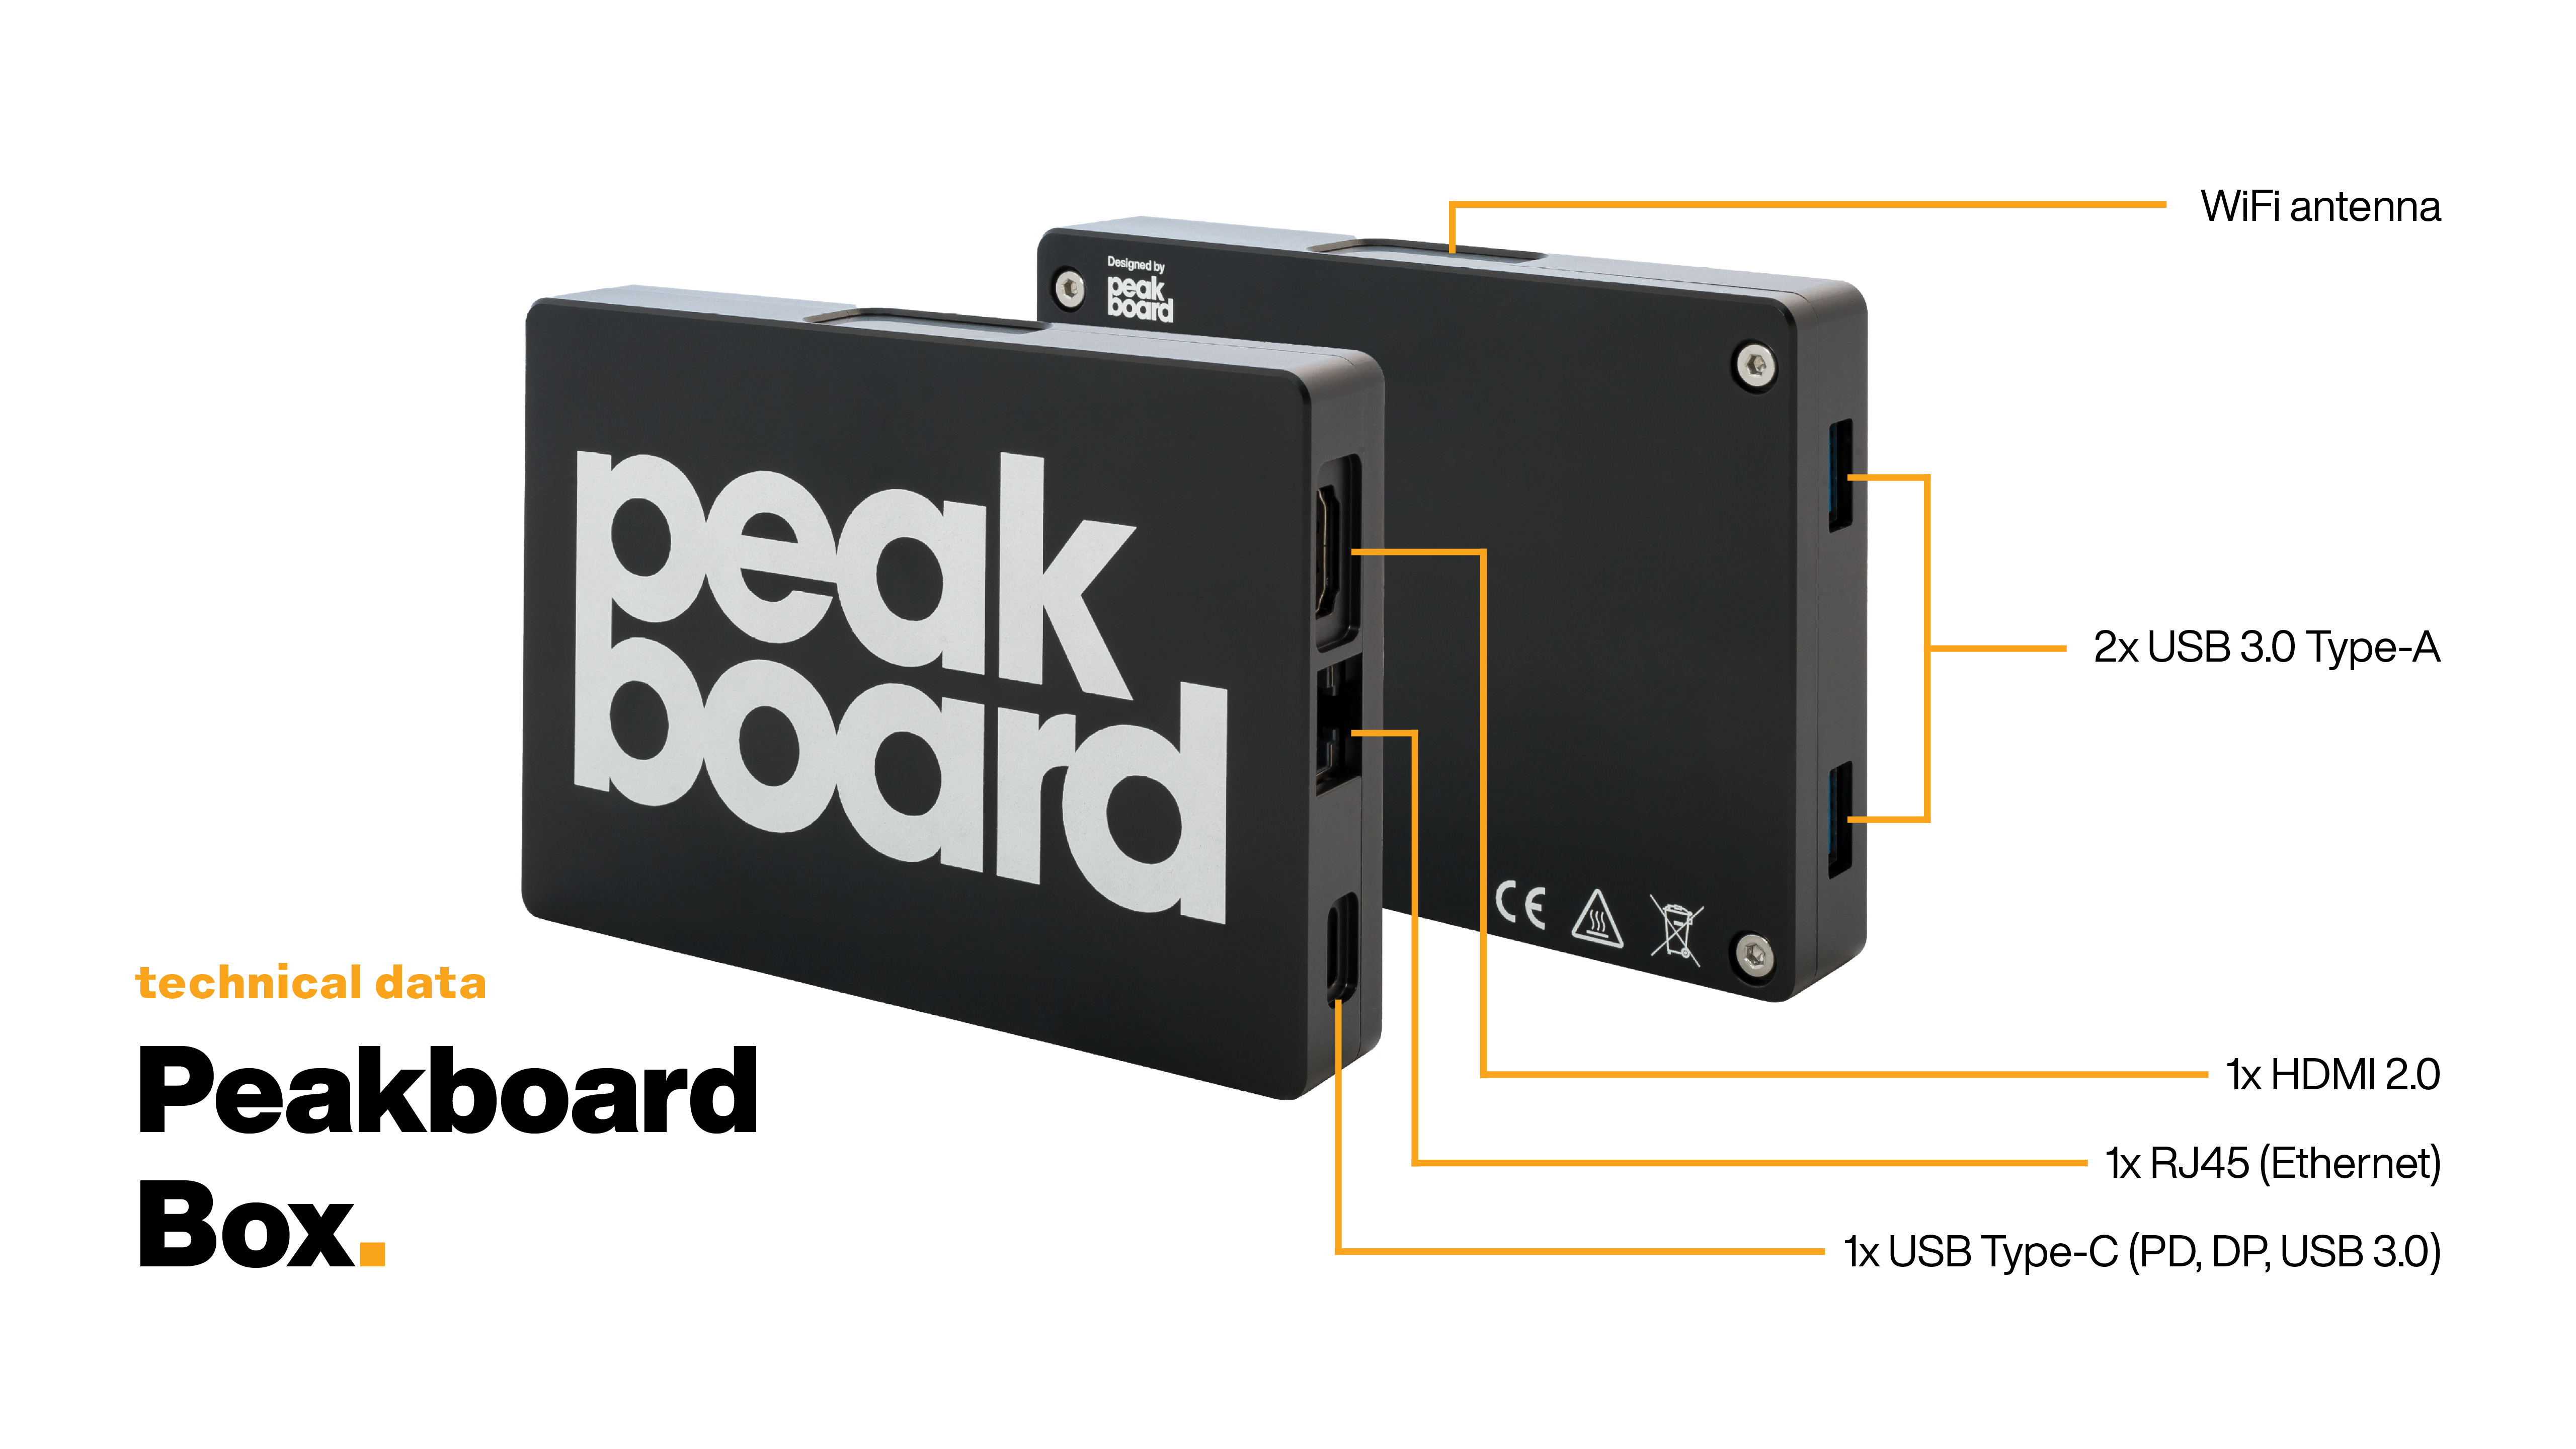 The Peakboard Box